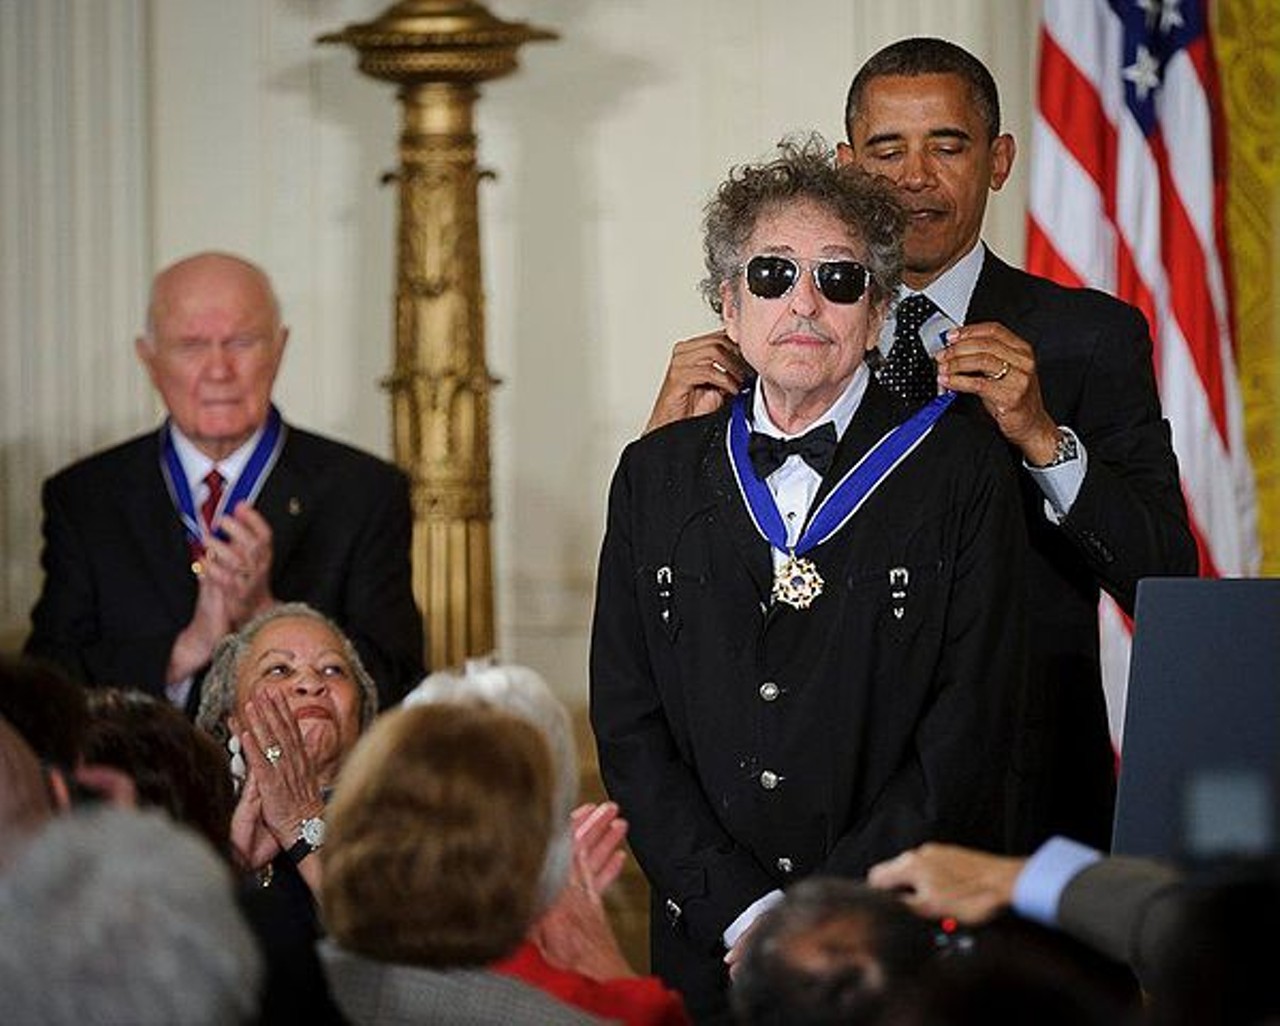  Bob Dylan at E.J. Thomas Hall
Fri, Nov. 3
Photo via Wikimedia